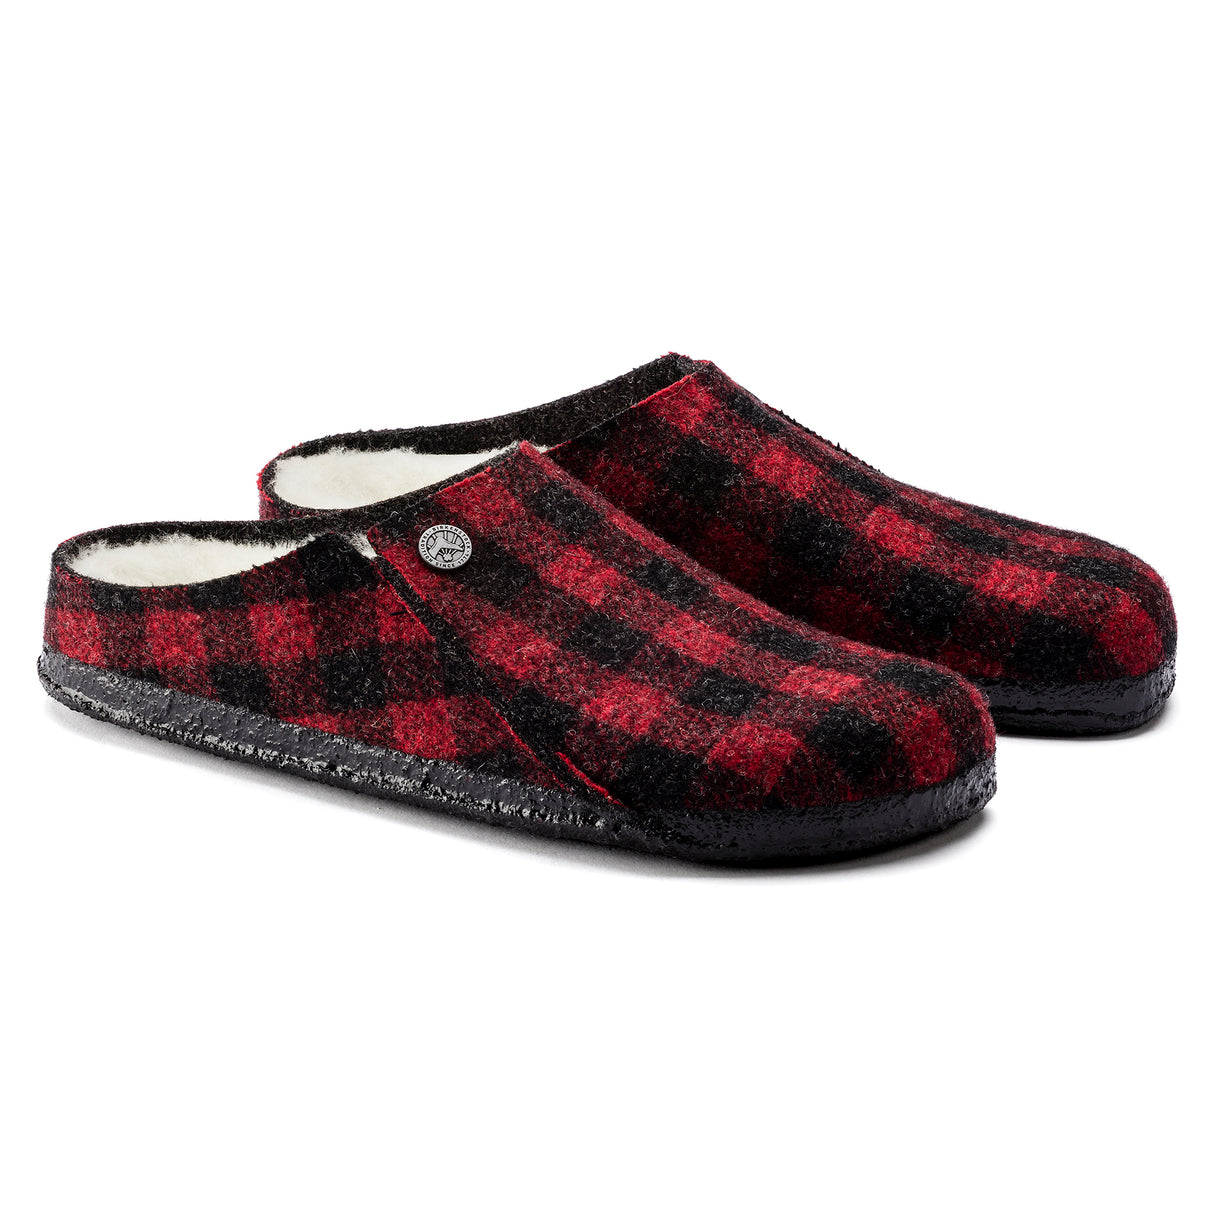 Birkenstock Zermatt Shearling Narrow Slipper (Women) - Red Plaid/Natural Dress-Casual - Slippers - The Heel Shoe Fitters